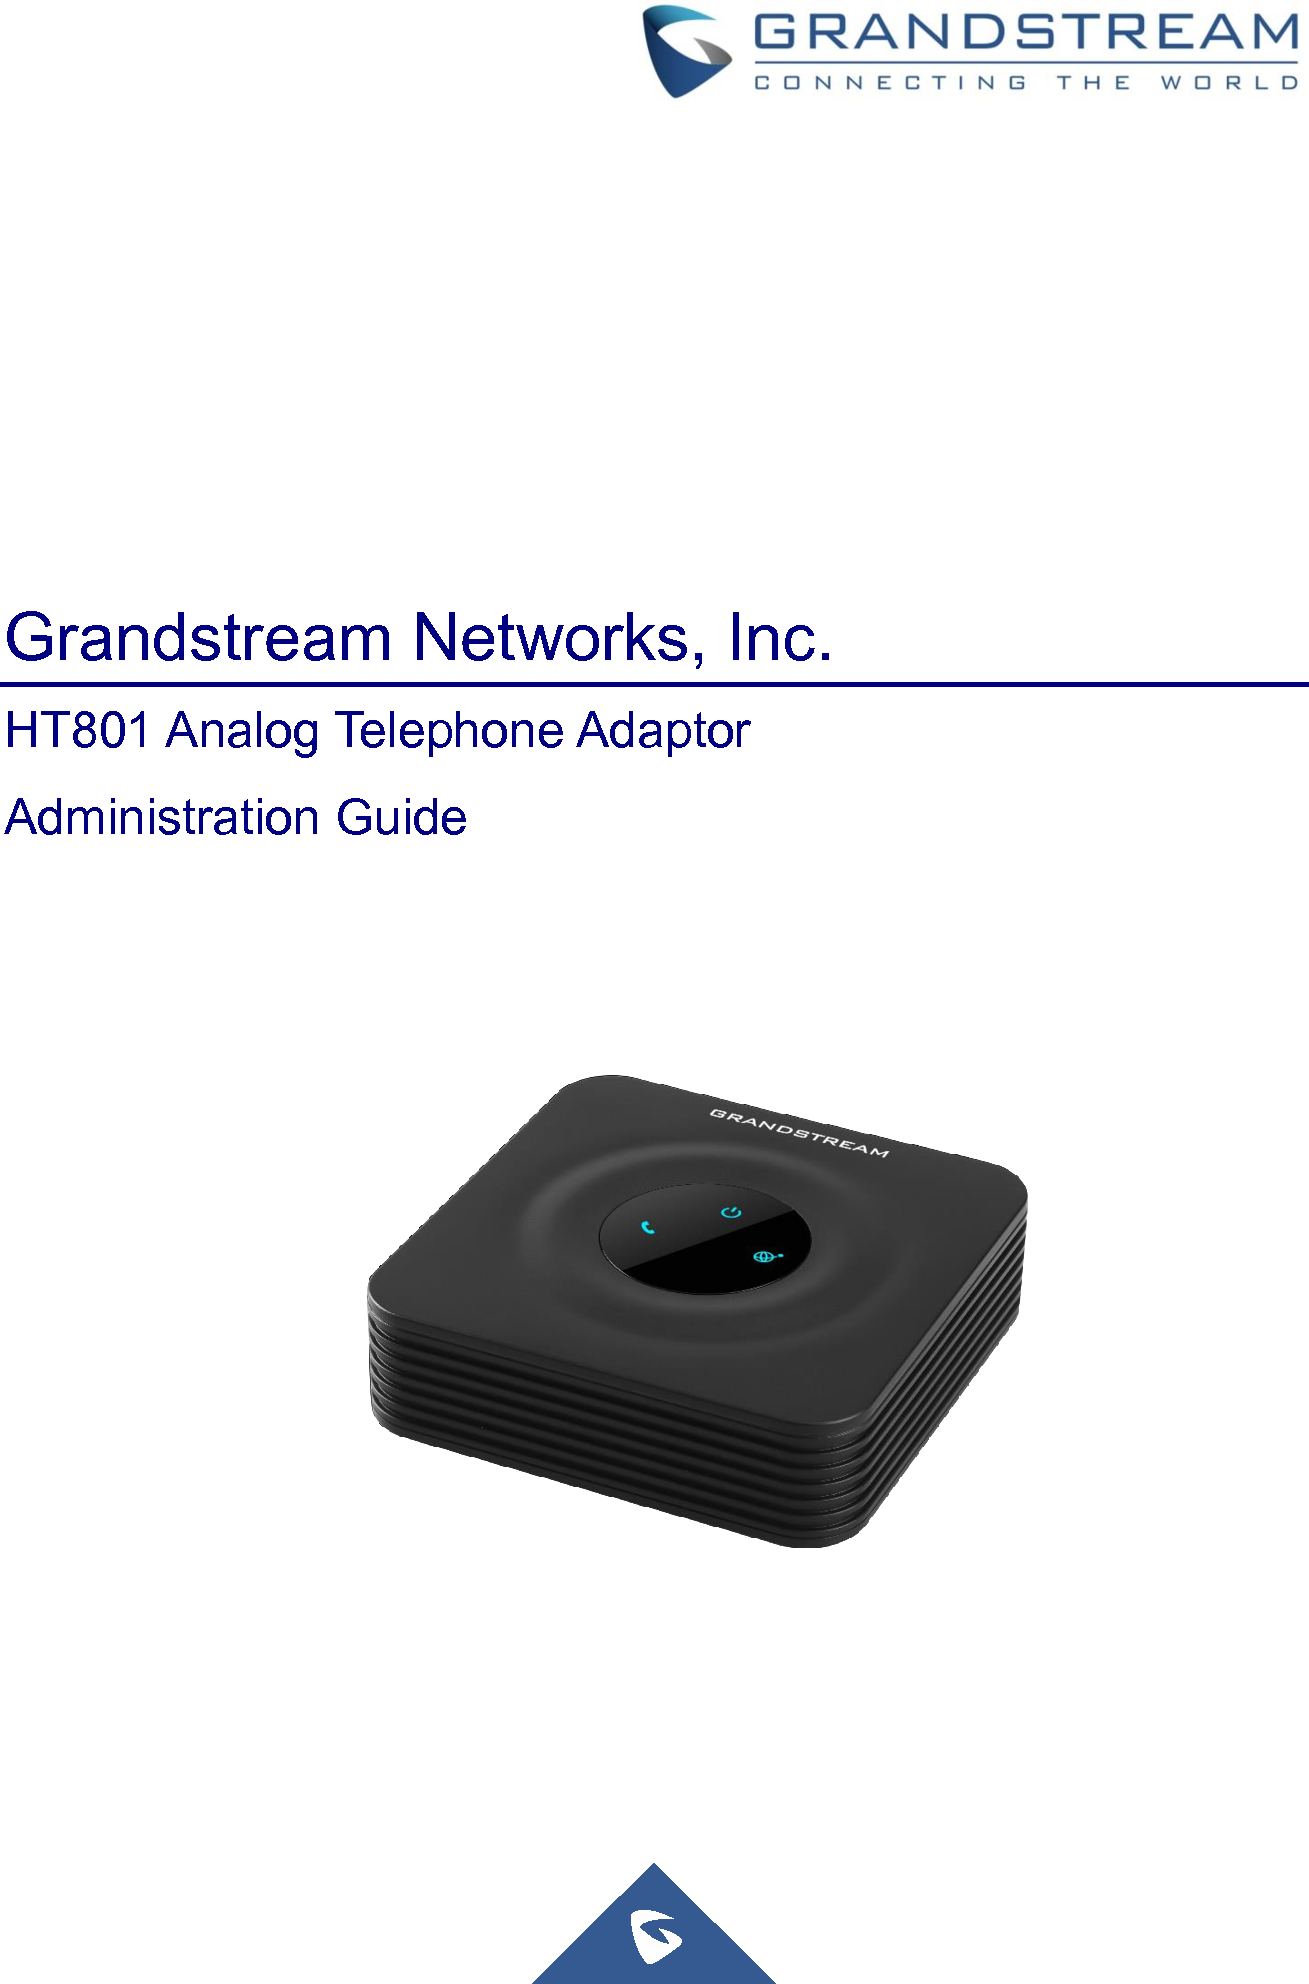                      Grandstream Networks, Inc. HT801 Analog Telephone Adaptor Administration Guide 